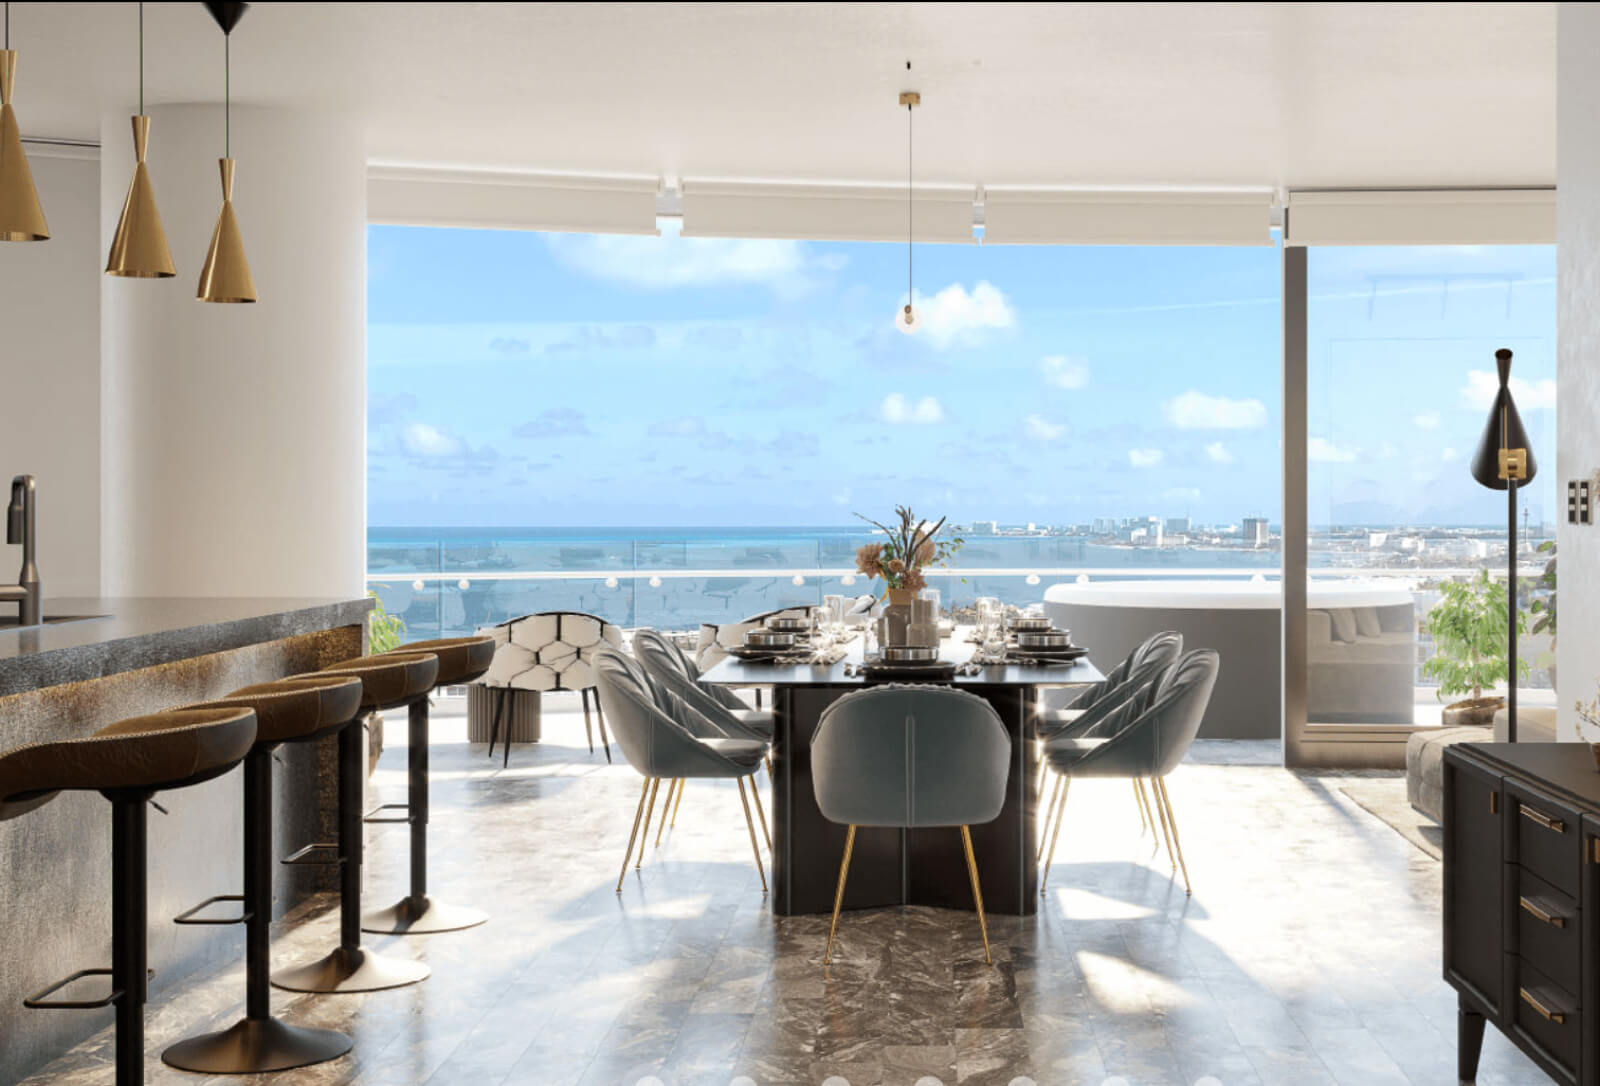 Luxury penthouse, ocean view, pool, pet-friendly, for sale Cancun.